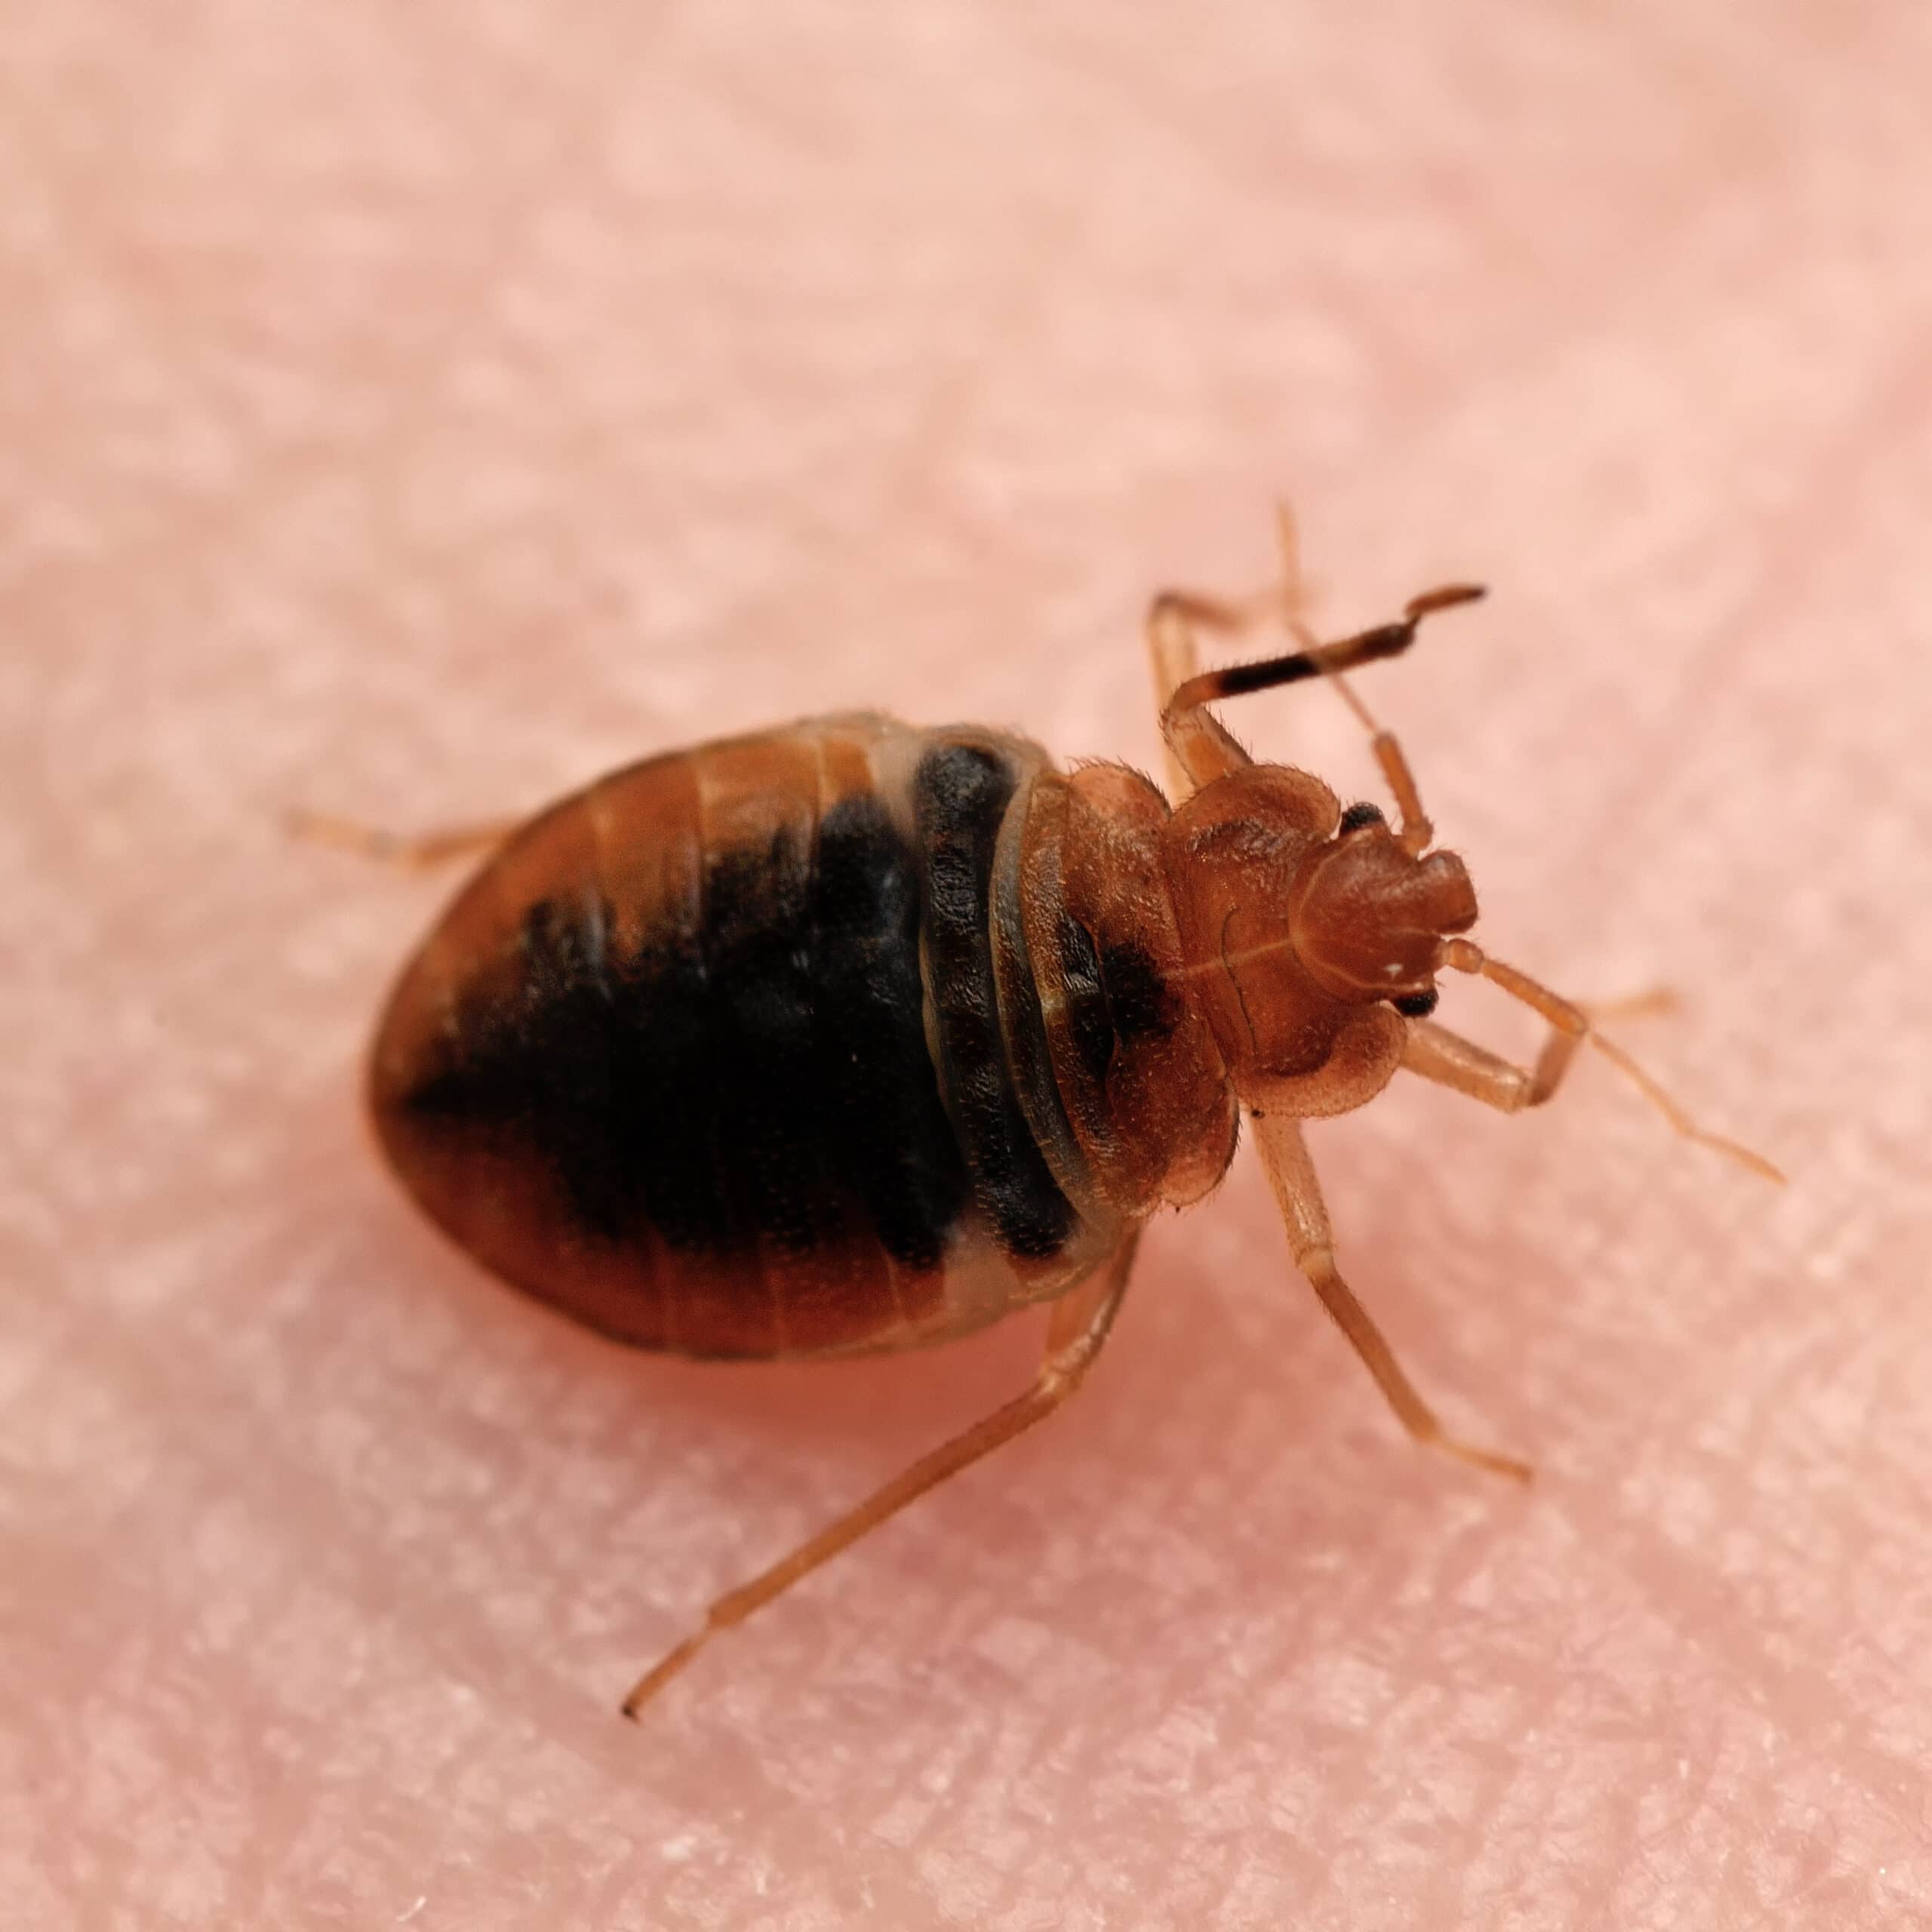 bed bug on human skin